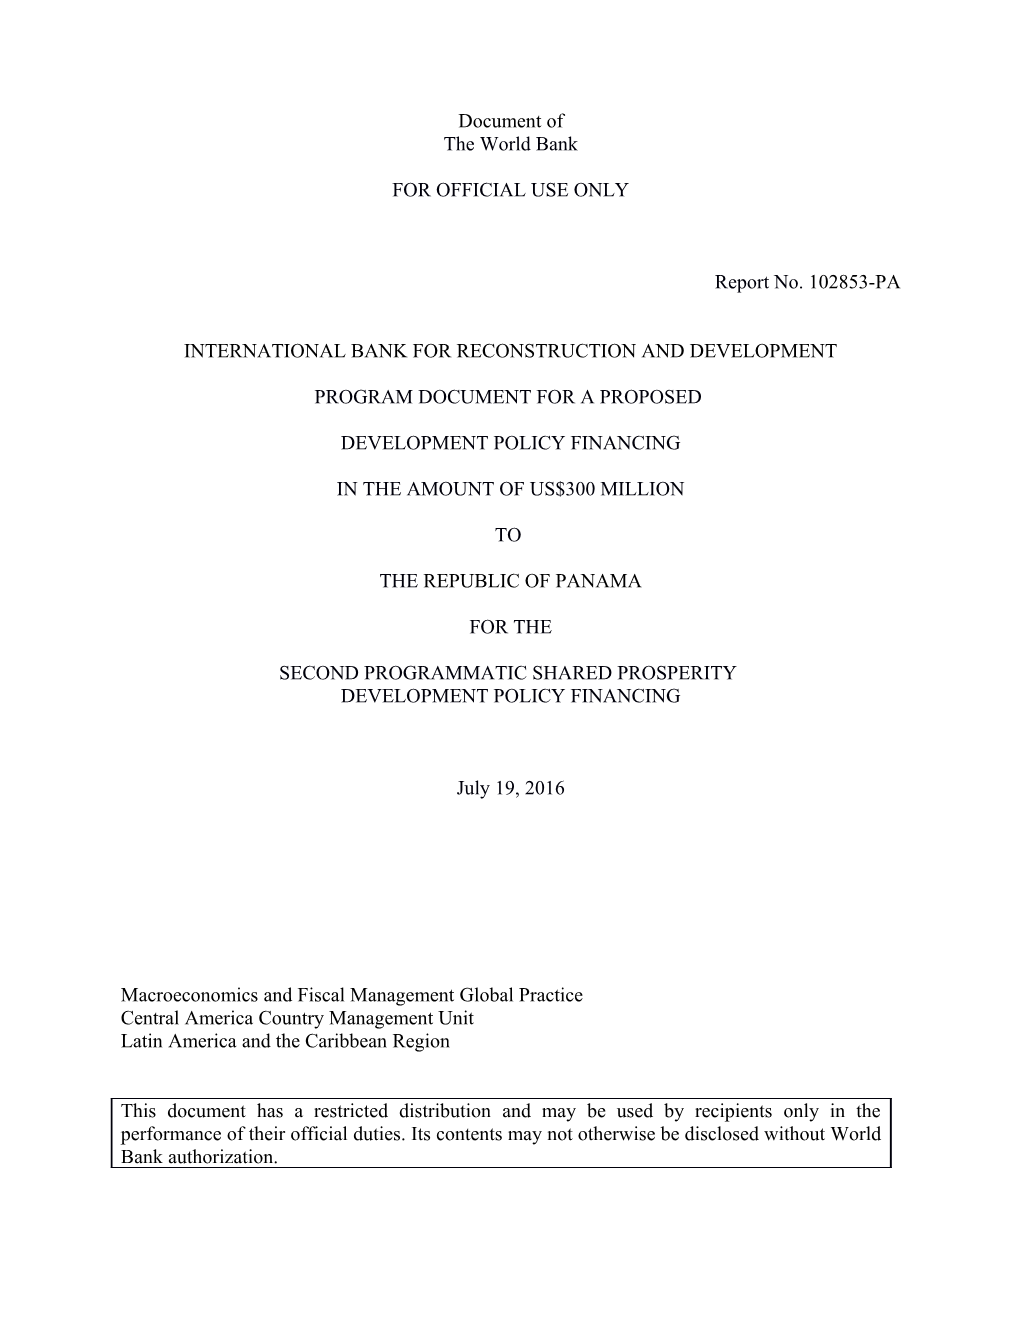 Panama Second Shared Prosperity Development Policy Loan Program Document